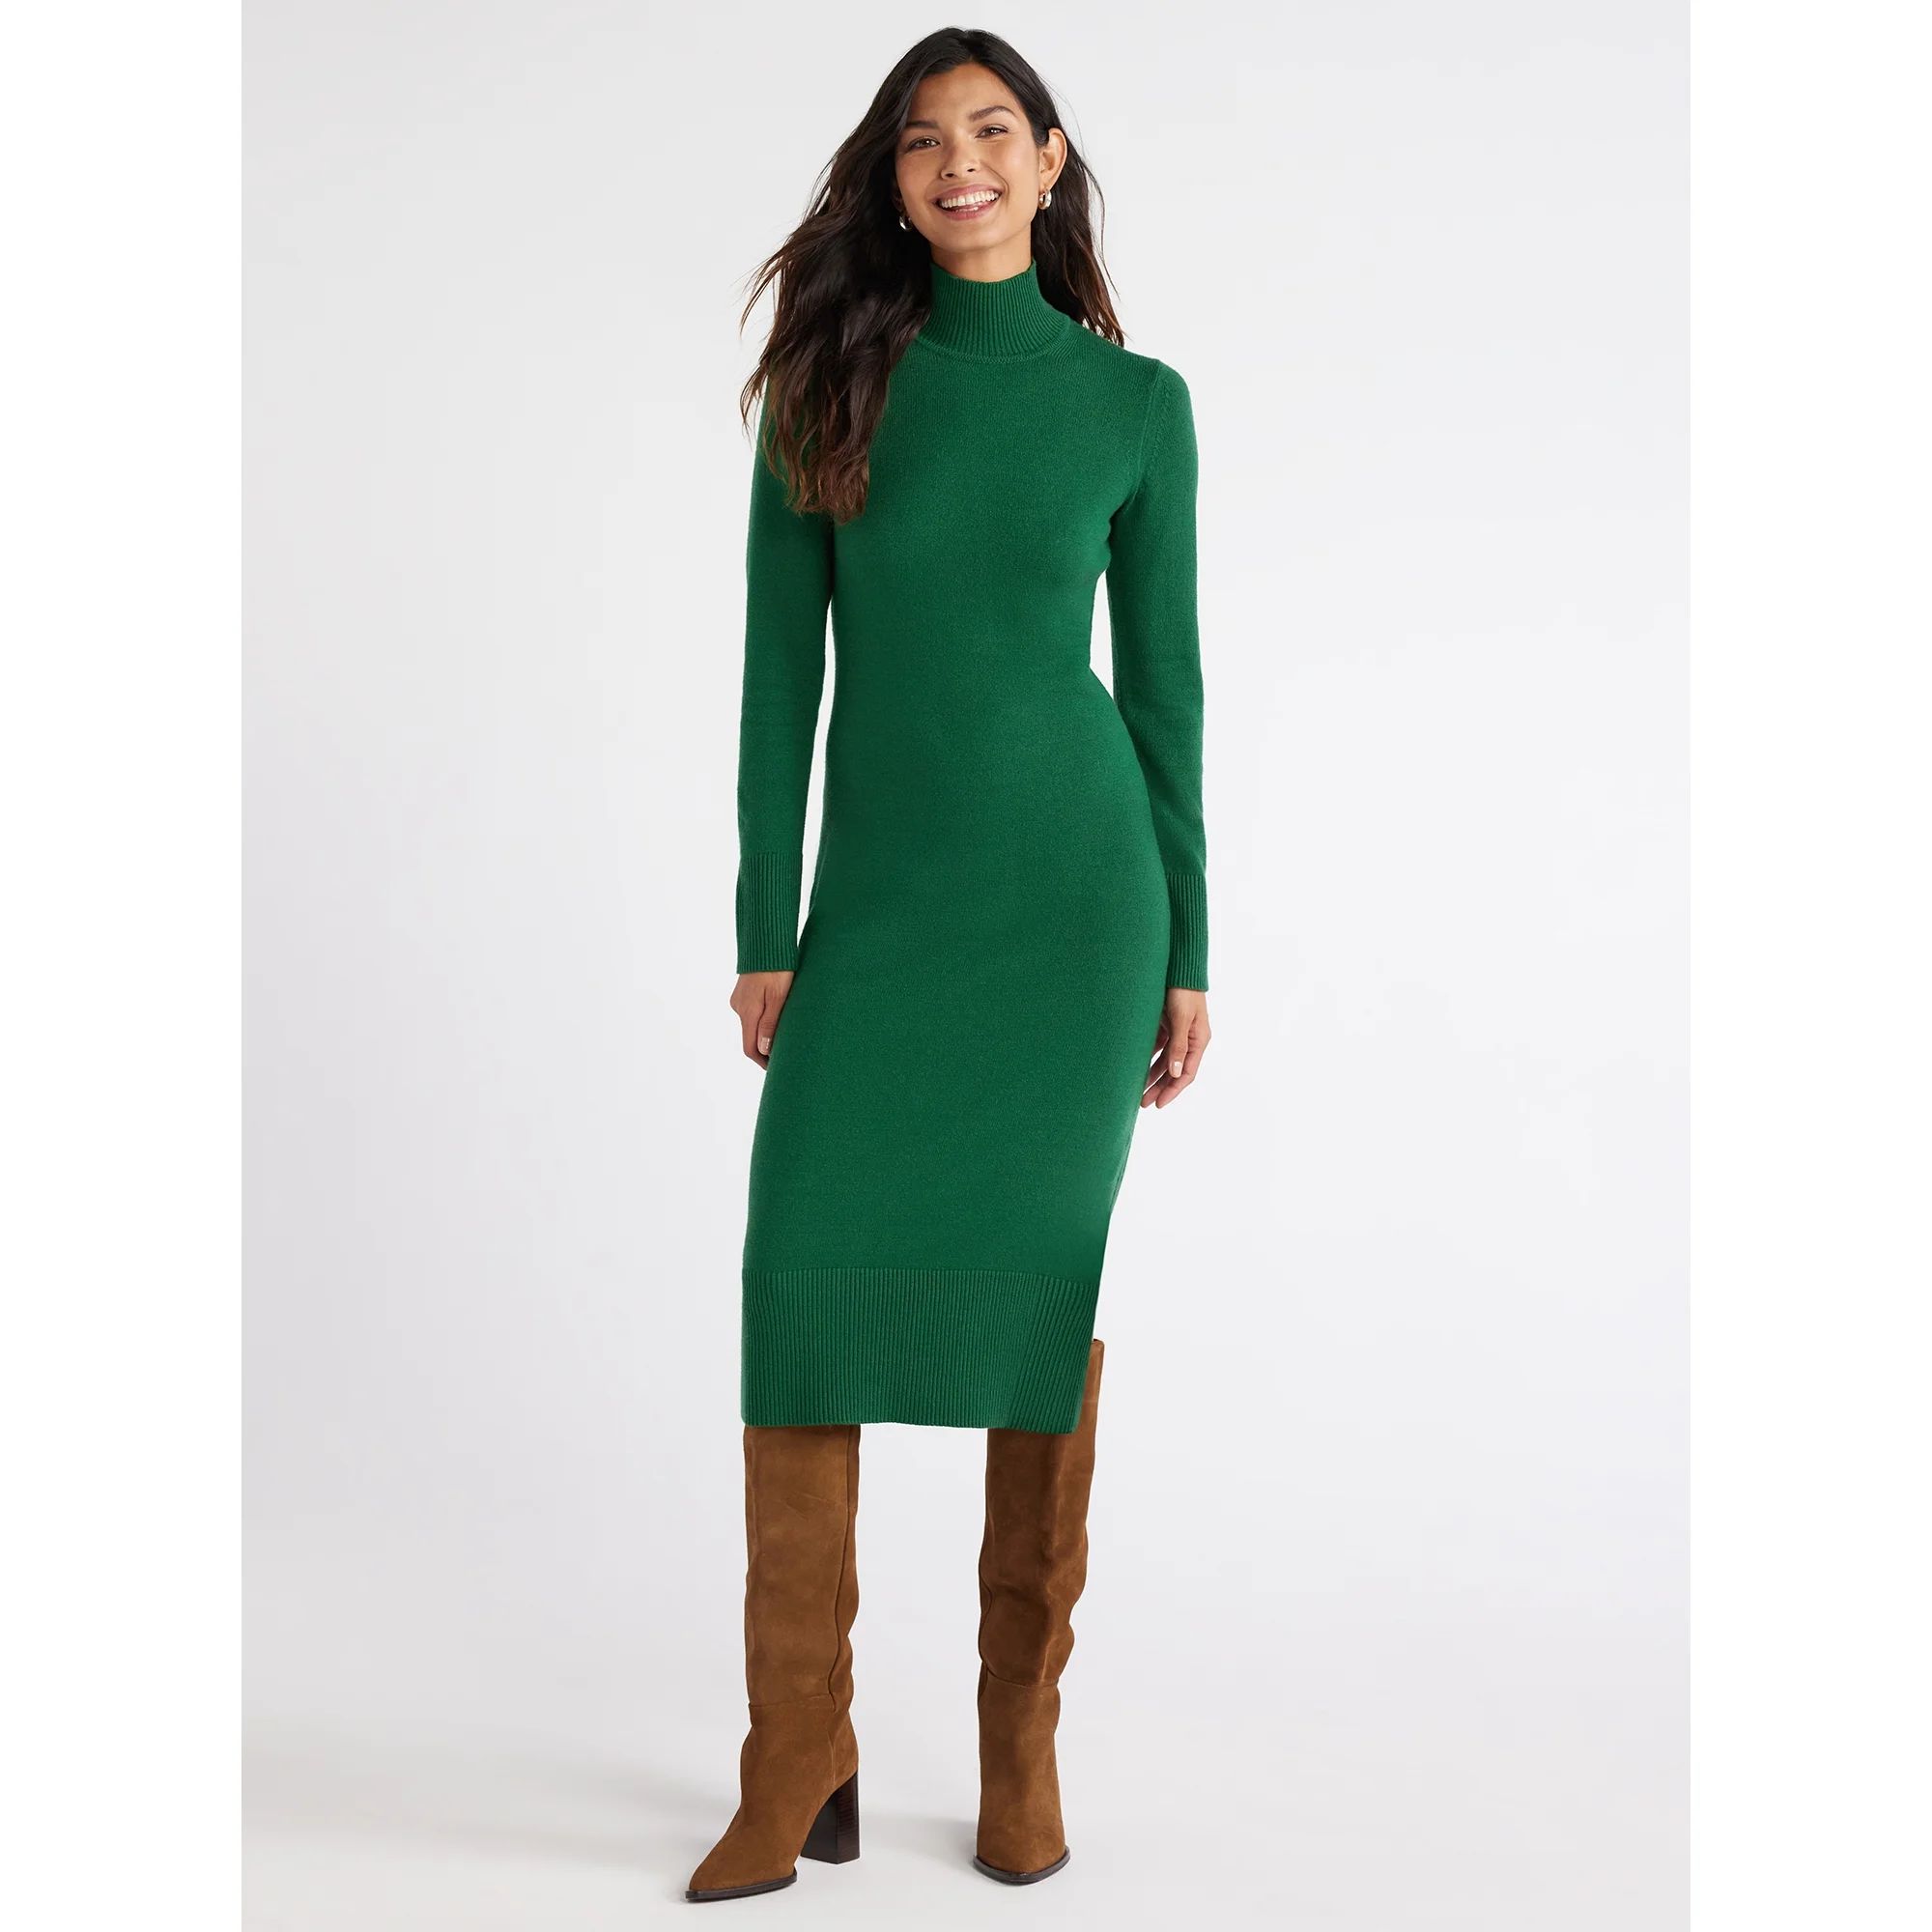 Free Assembly Women’s Turtleneck Sweater Midi Dress with Long Sleeves, Sizes XS-XXXL | Walmart (US)